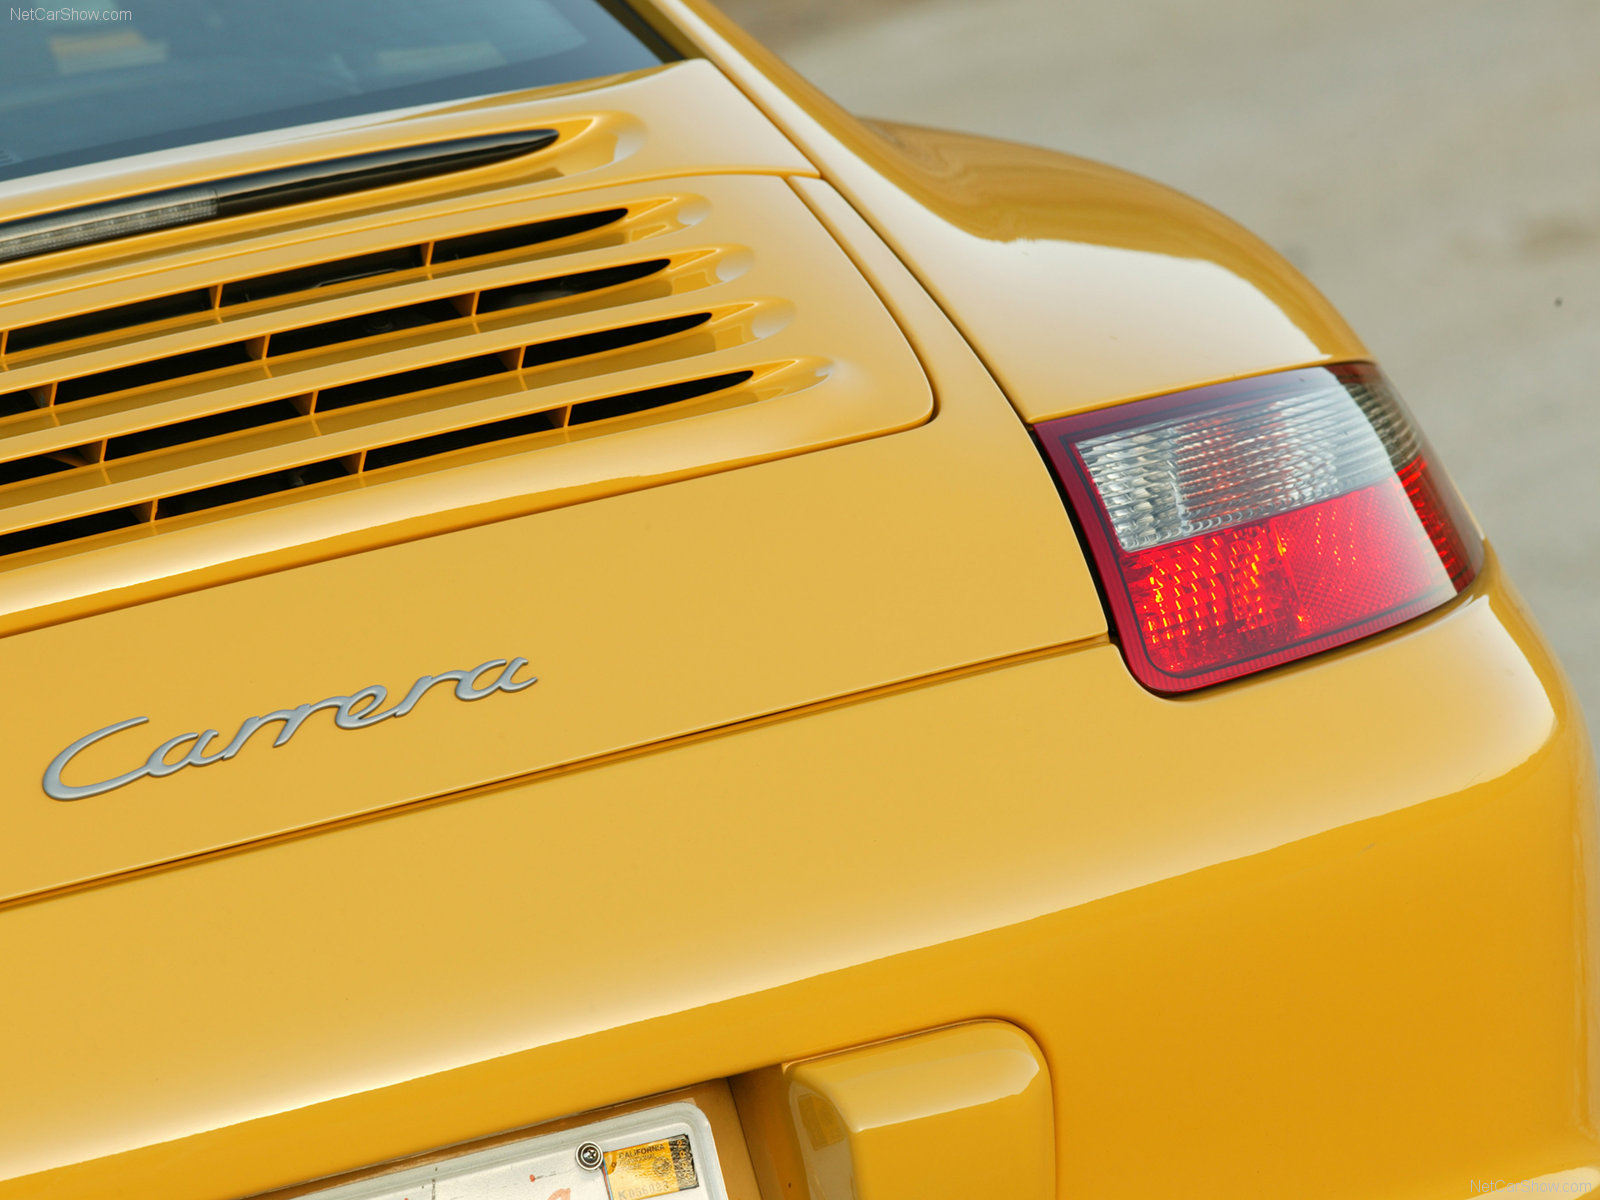 2006 Yellow Porsche 911 Carrera Coupe Wallpapers